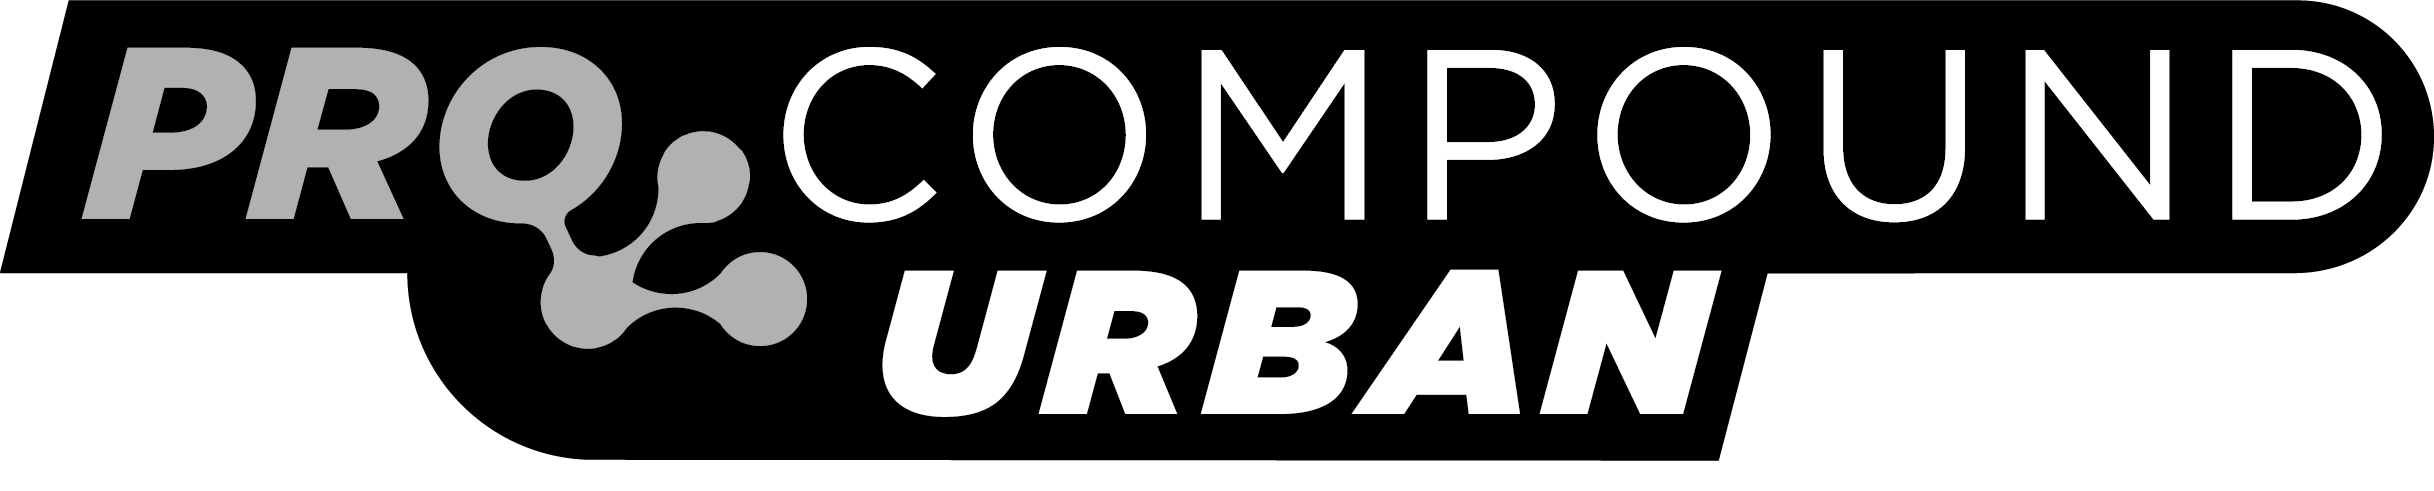 PROCompound Urban logo